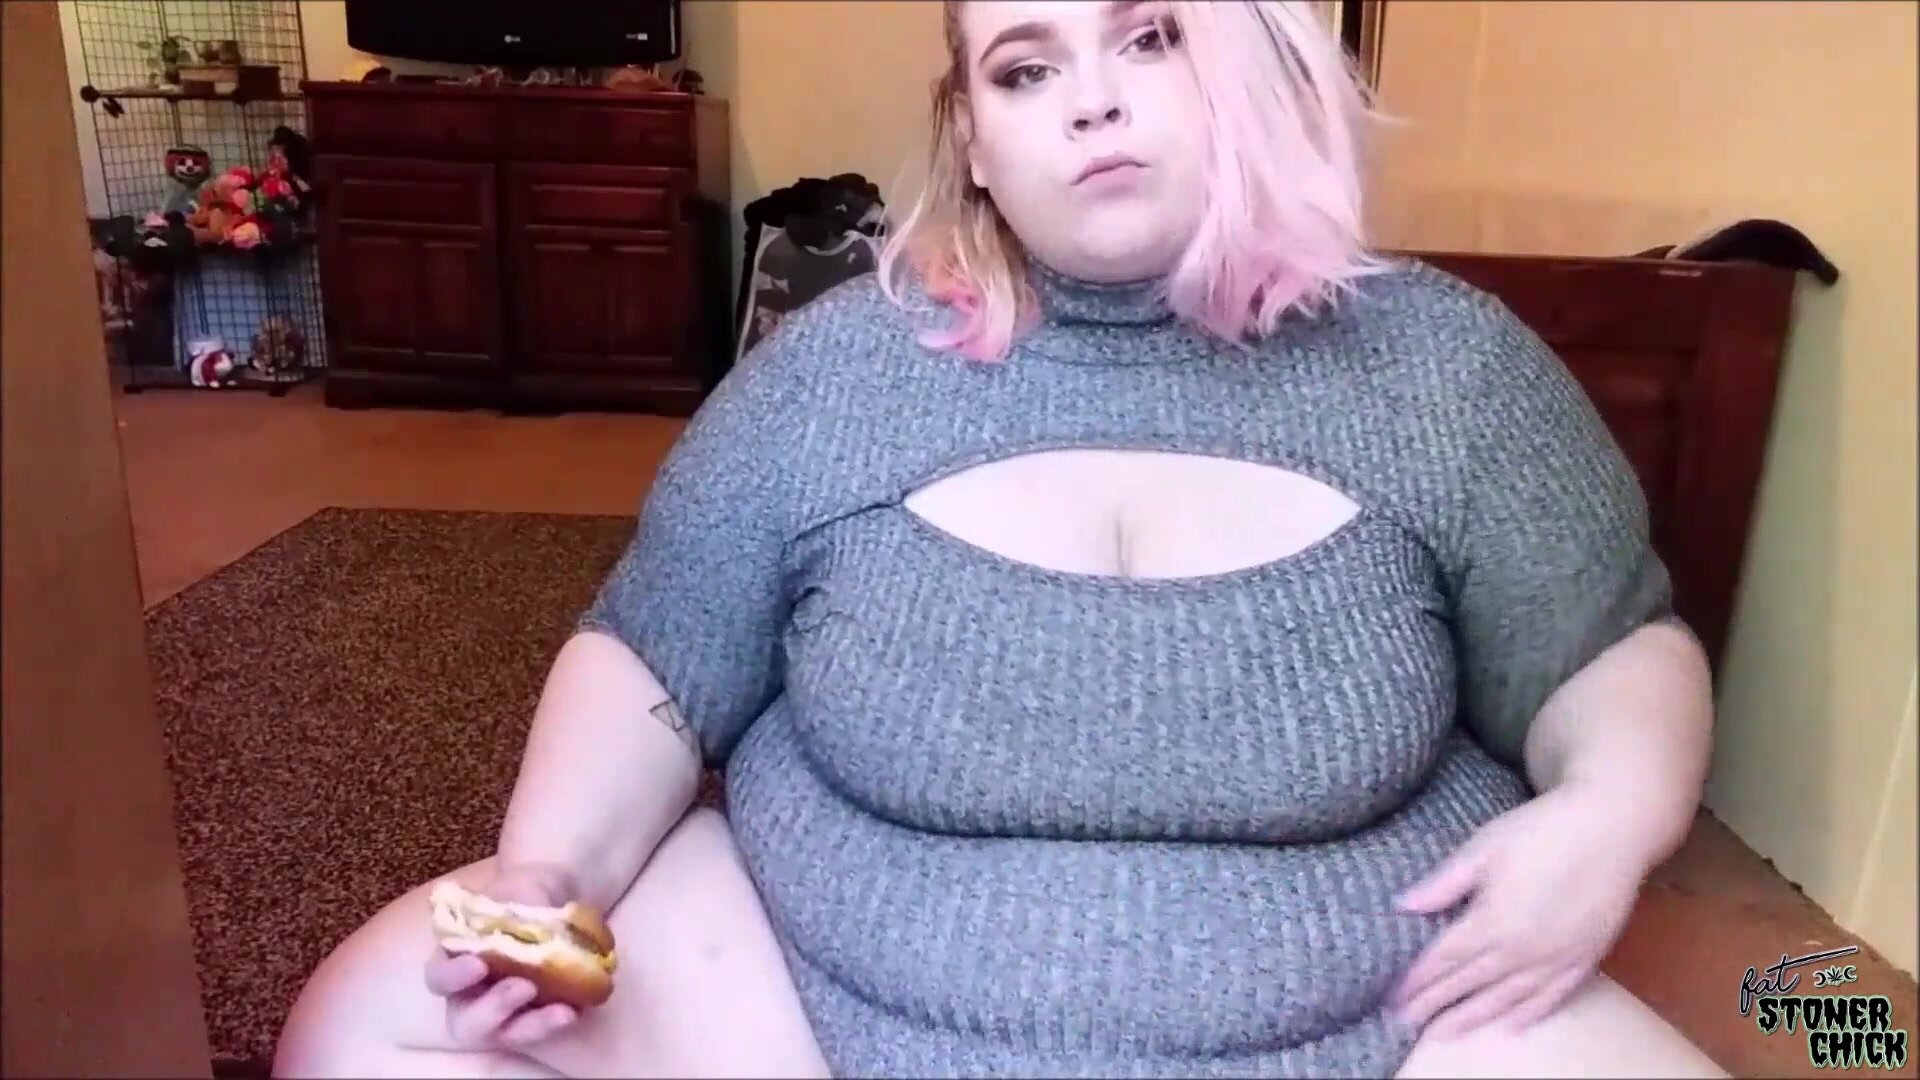 Fat Stoner Chick eats hamburgers and burps..